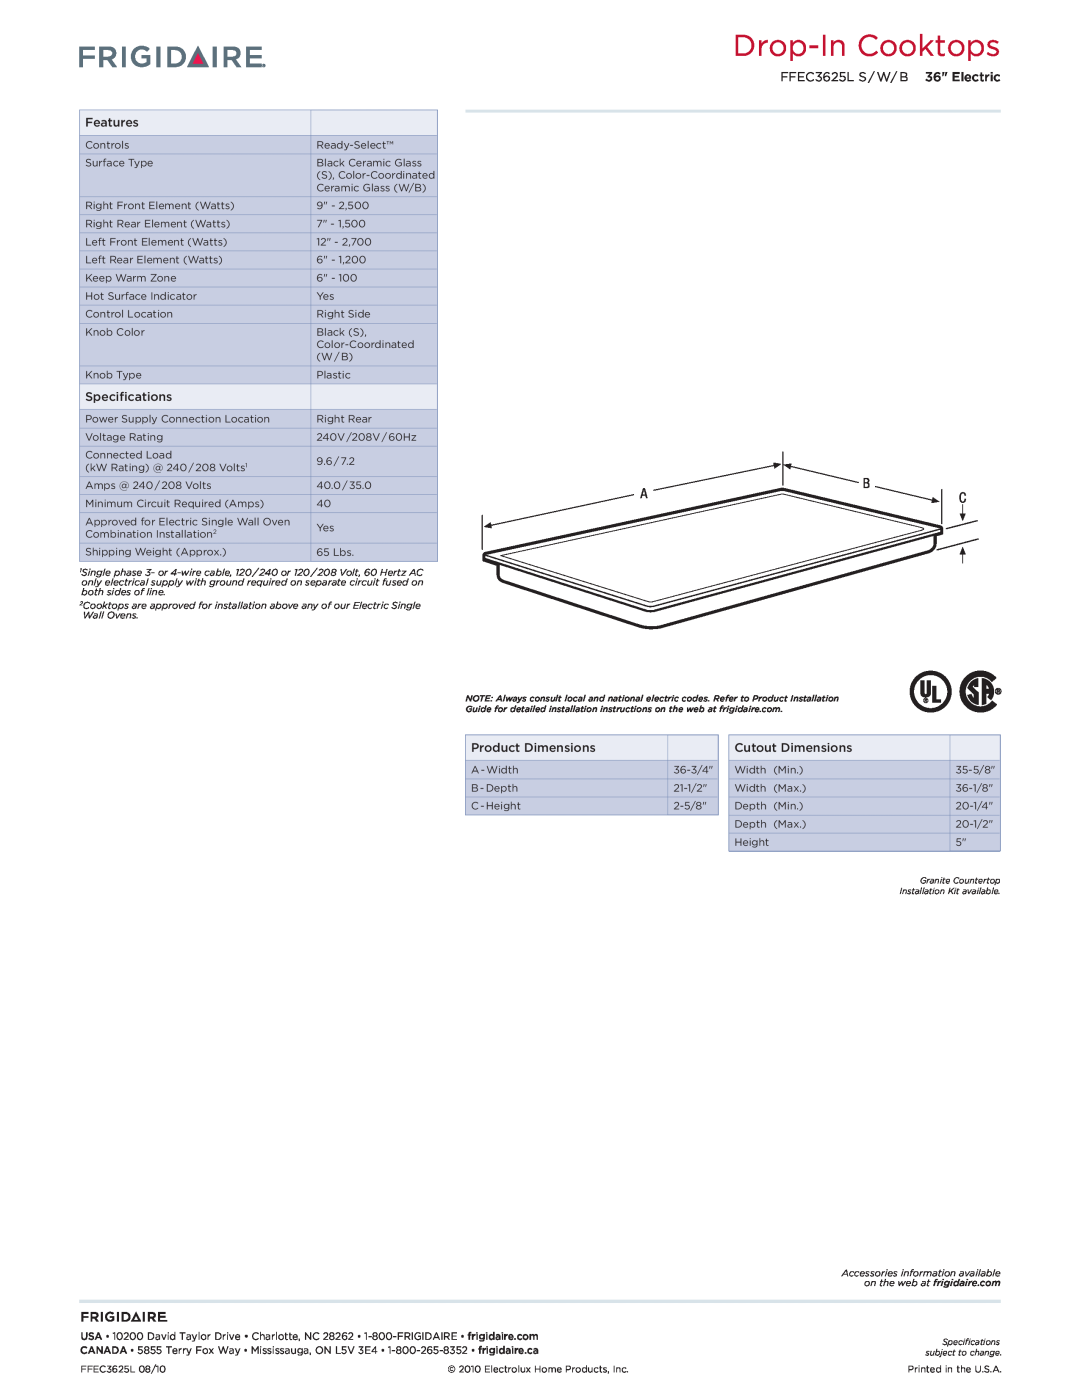 Frigidaire FFEC3625L dimensions Drop-InCooktops, Features, Specifications, Product Dimensions, Cutout Dimensions 